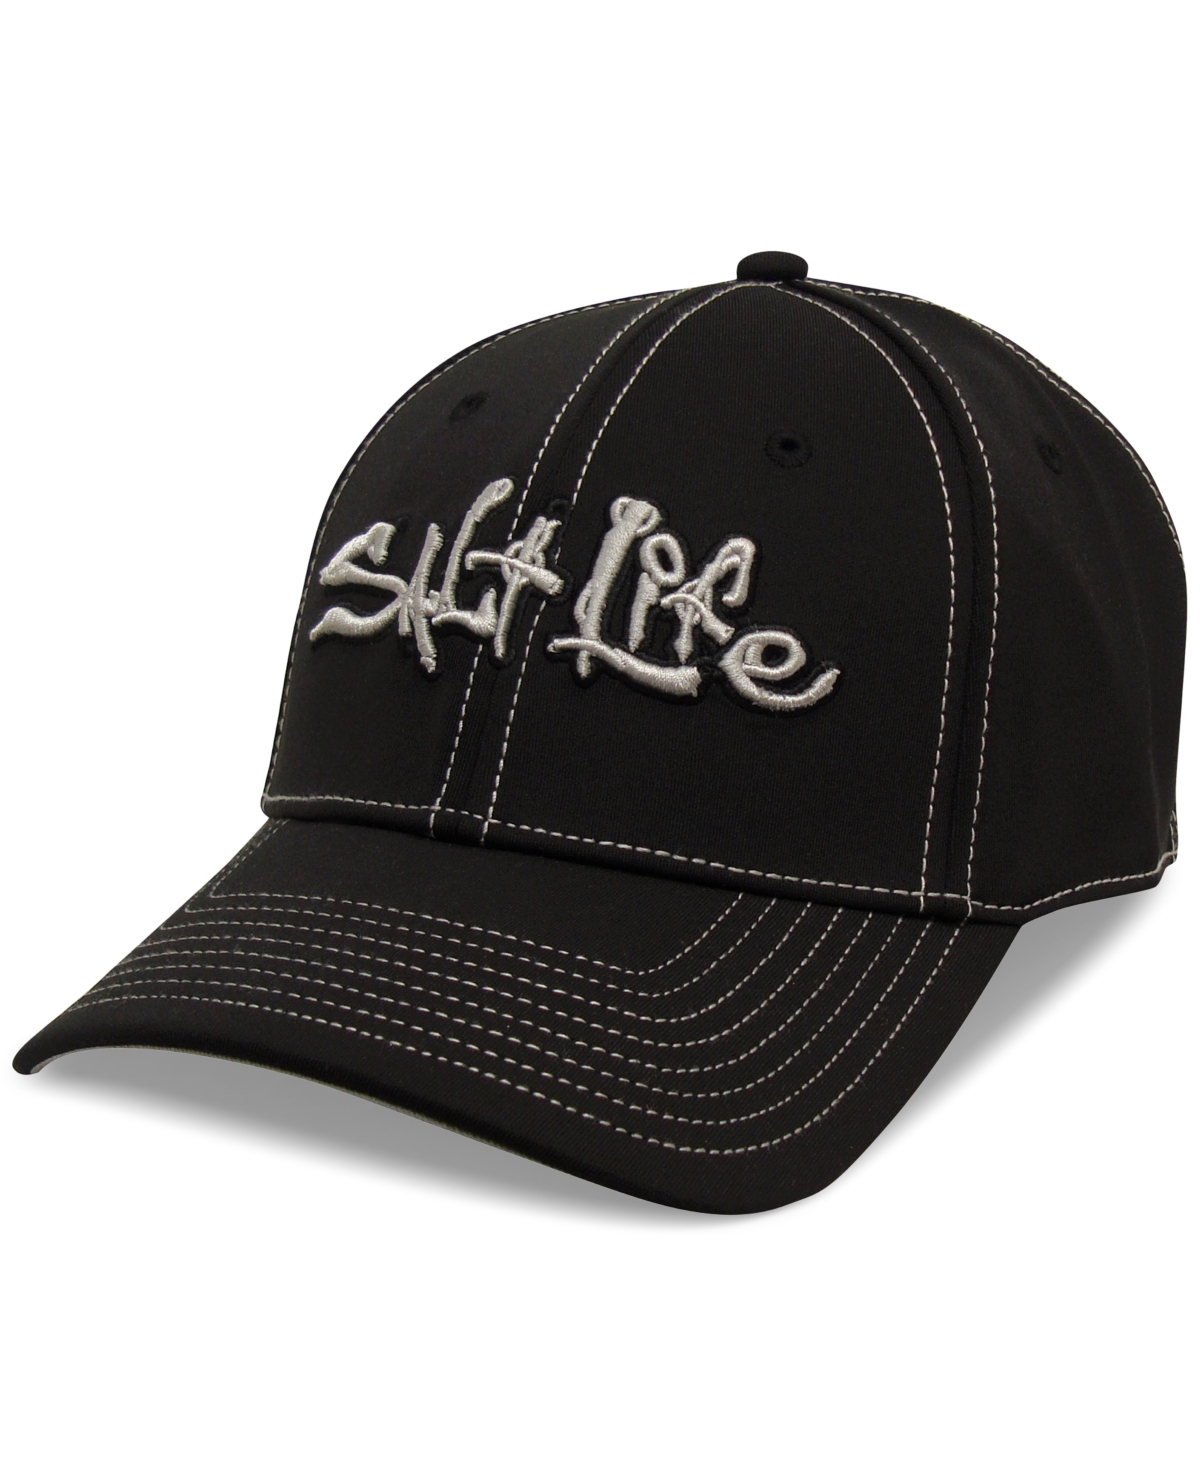 Men's Technical Signature Hat - Black